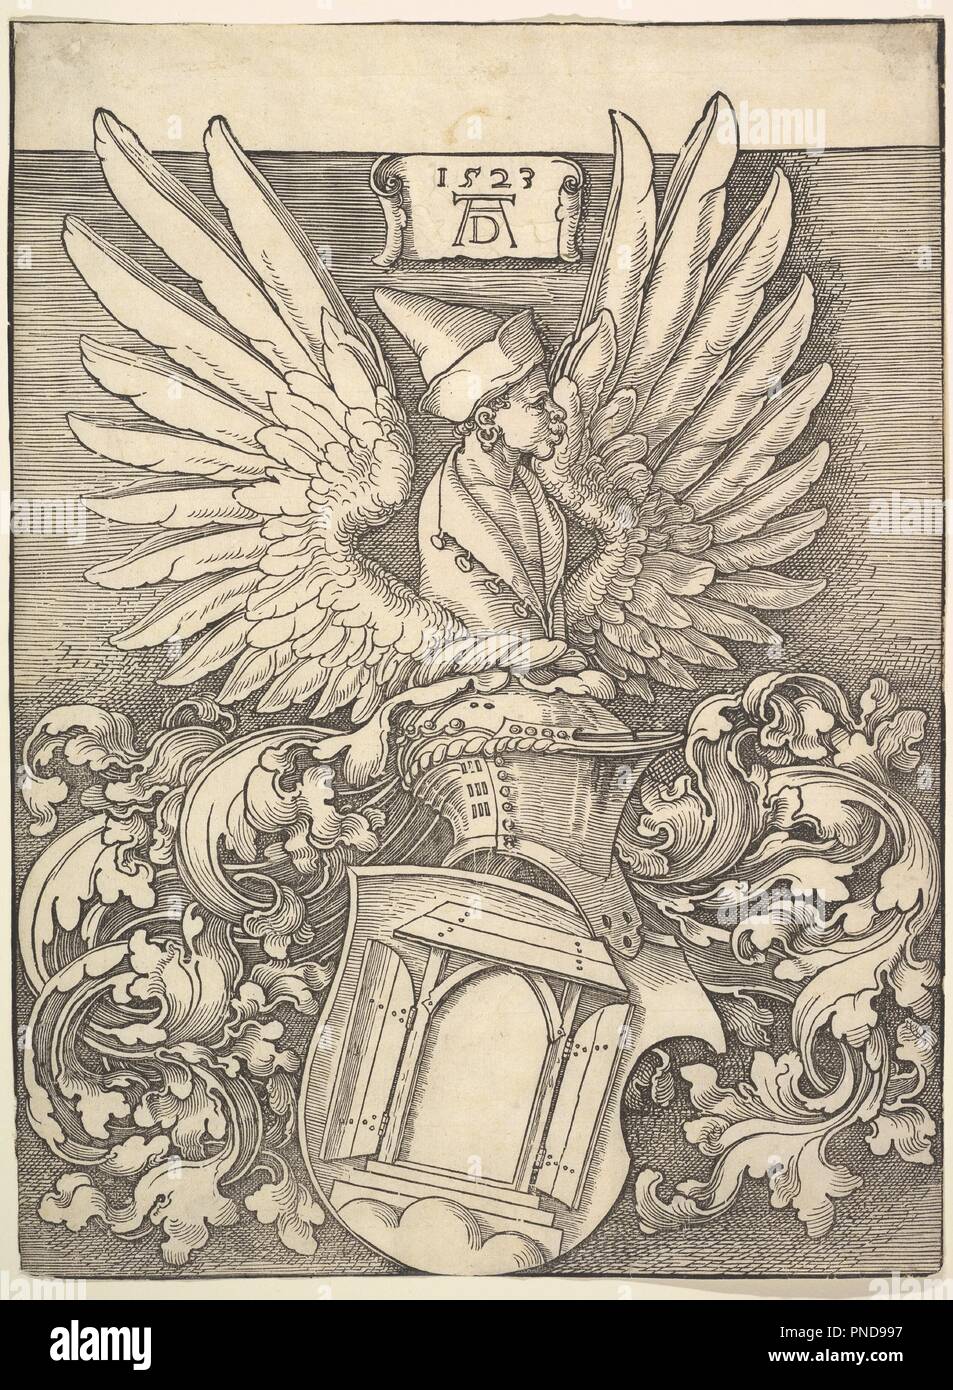 Coat of Arms of Albrecht Dürer. Artist: Albrecht Dürer (German, Nuremberg 1471-1528 Nuremberg). Dimensions: sheet: 13 13/16 x 10 1/4 in. (35.1 x 26.1 cm). Date: 1523. Museum: Metropolitan Museum of Art, New York, USA. Stock Photo